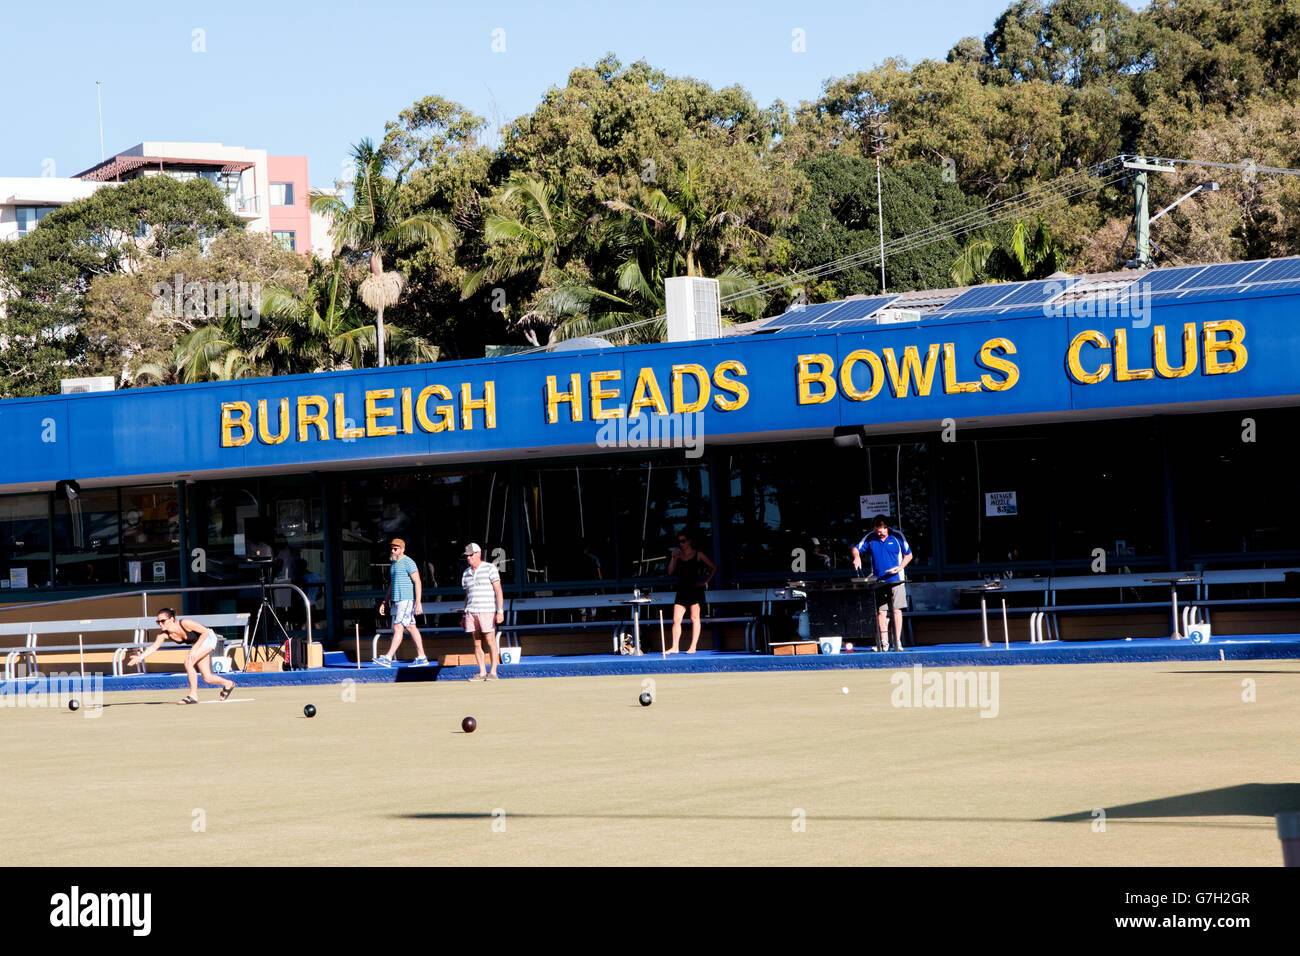 Burleigh Heads Bowls Club on the Gold Coast in Australia Stock Photo